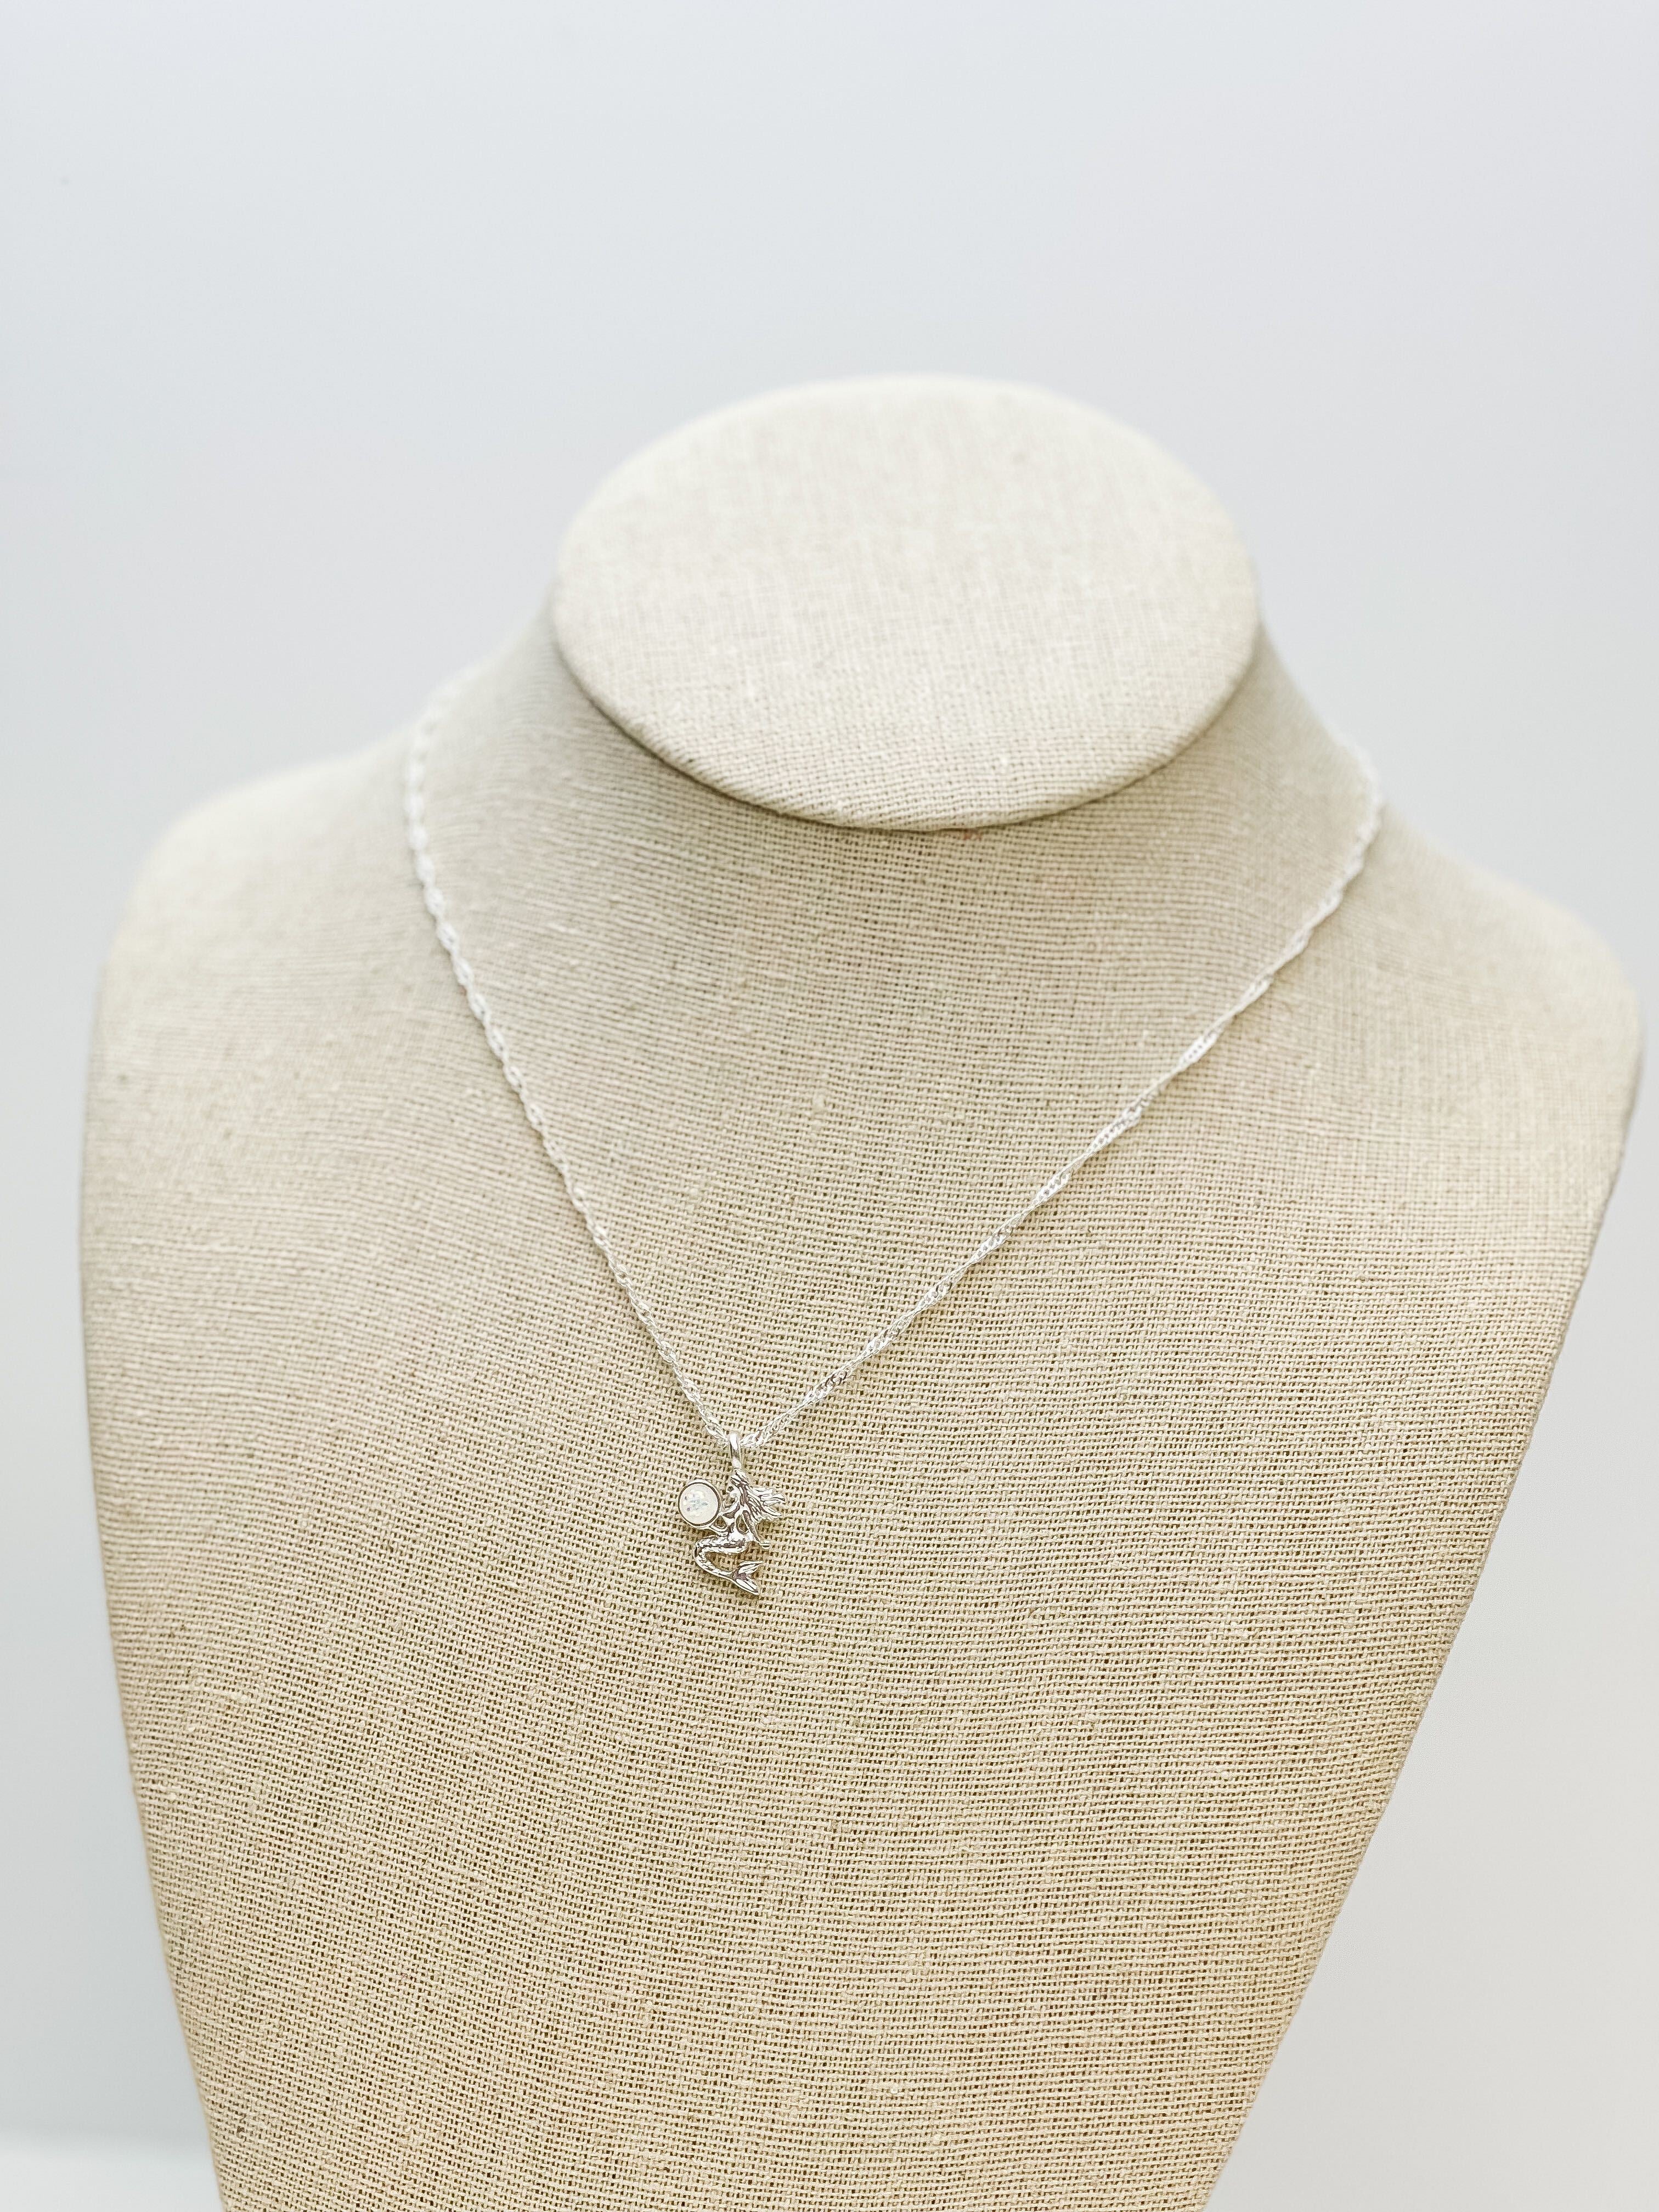 Opal Mermaid Pendant Necklace - Silver